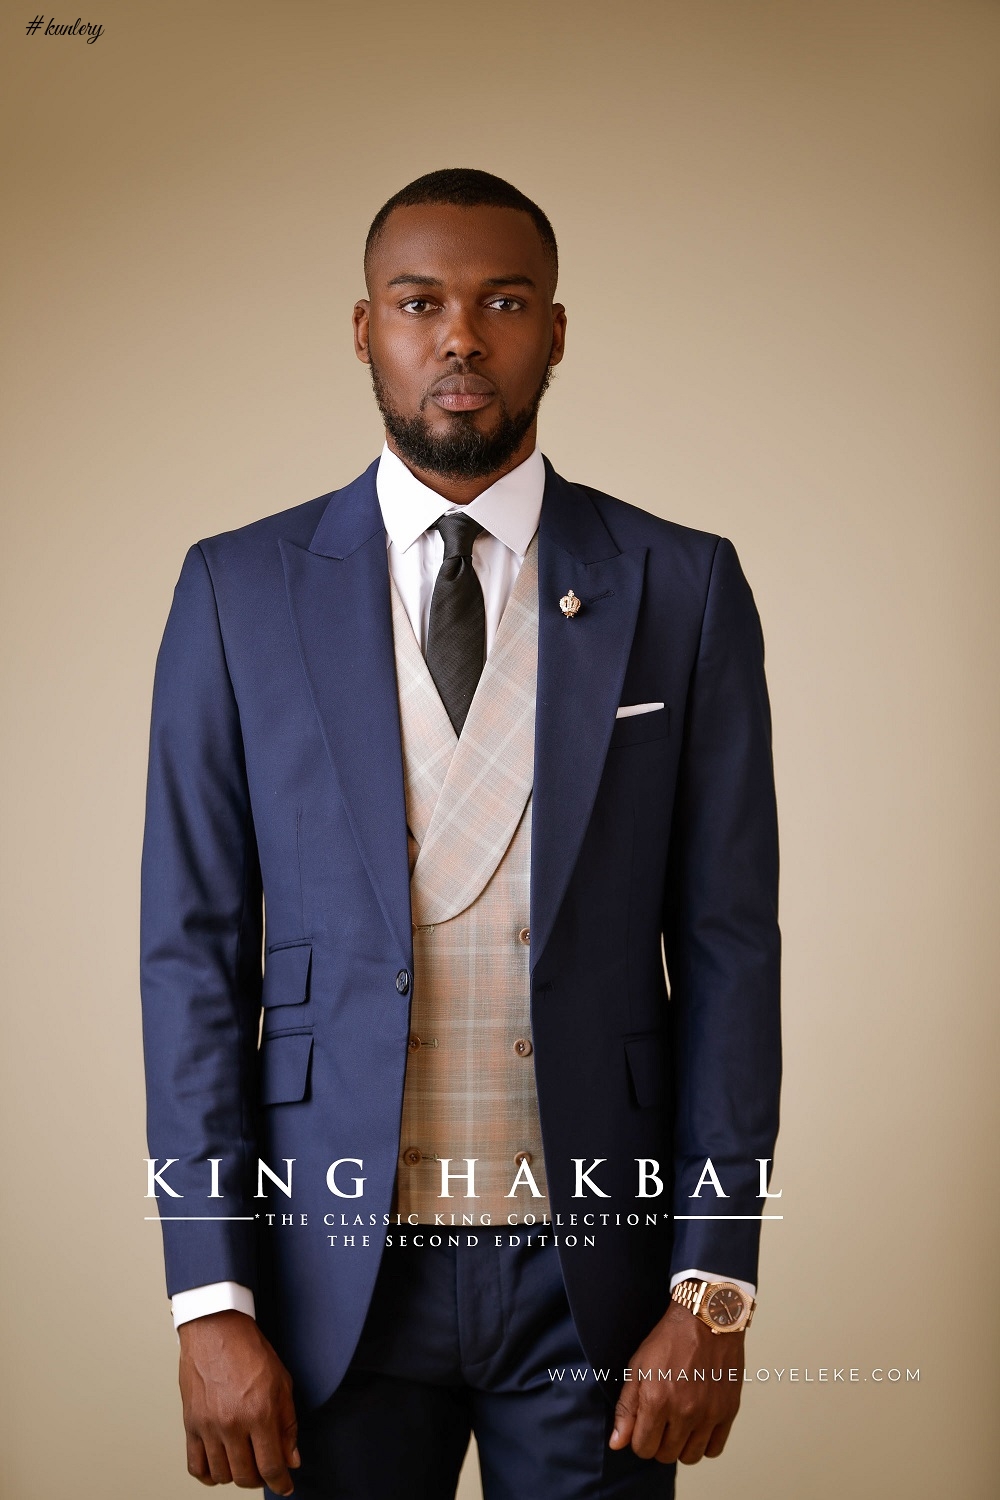 King Hakbal Releases ‘Classic King’ Lookbook Featuring Ninolowo Bolanle